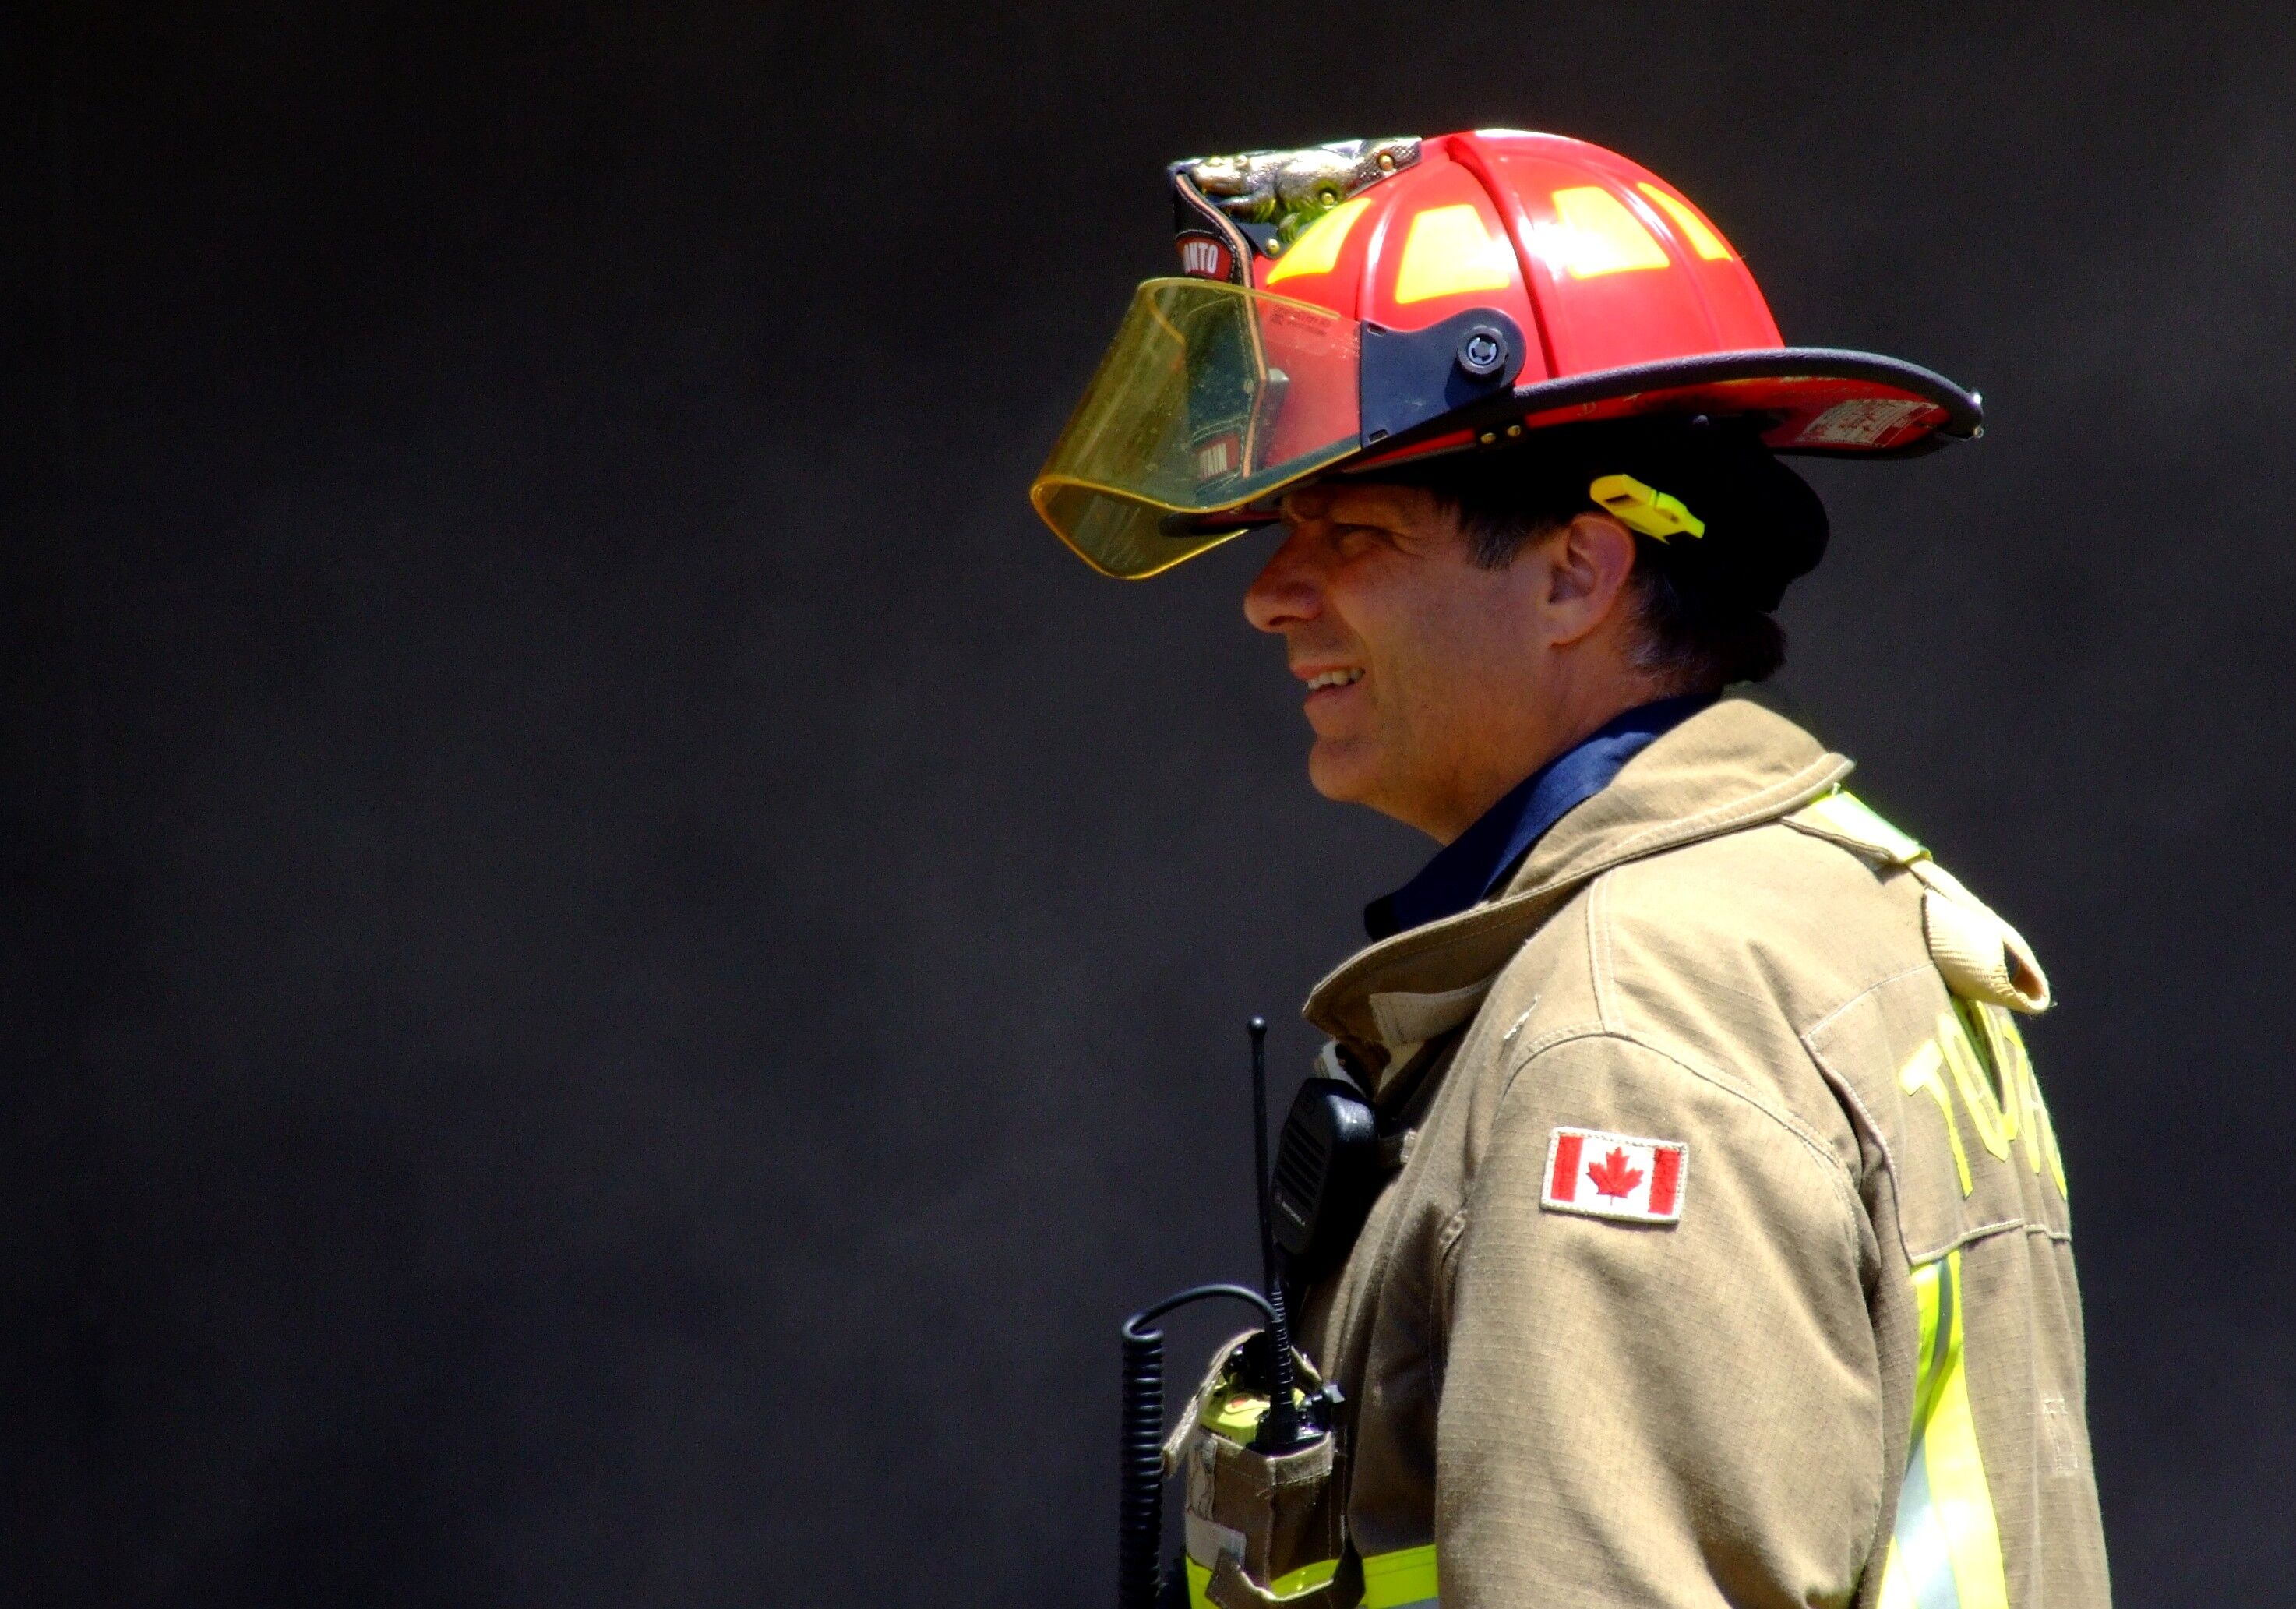 Firefighter, Public Safety Wiki